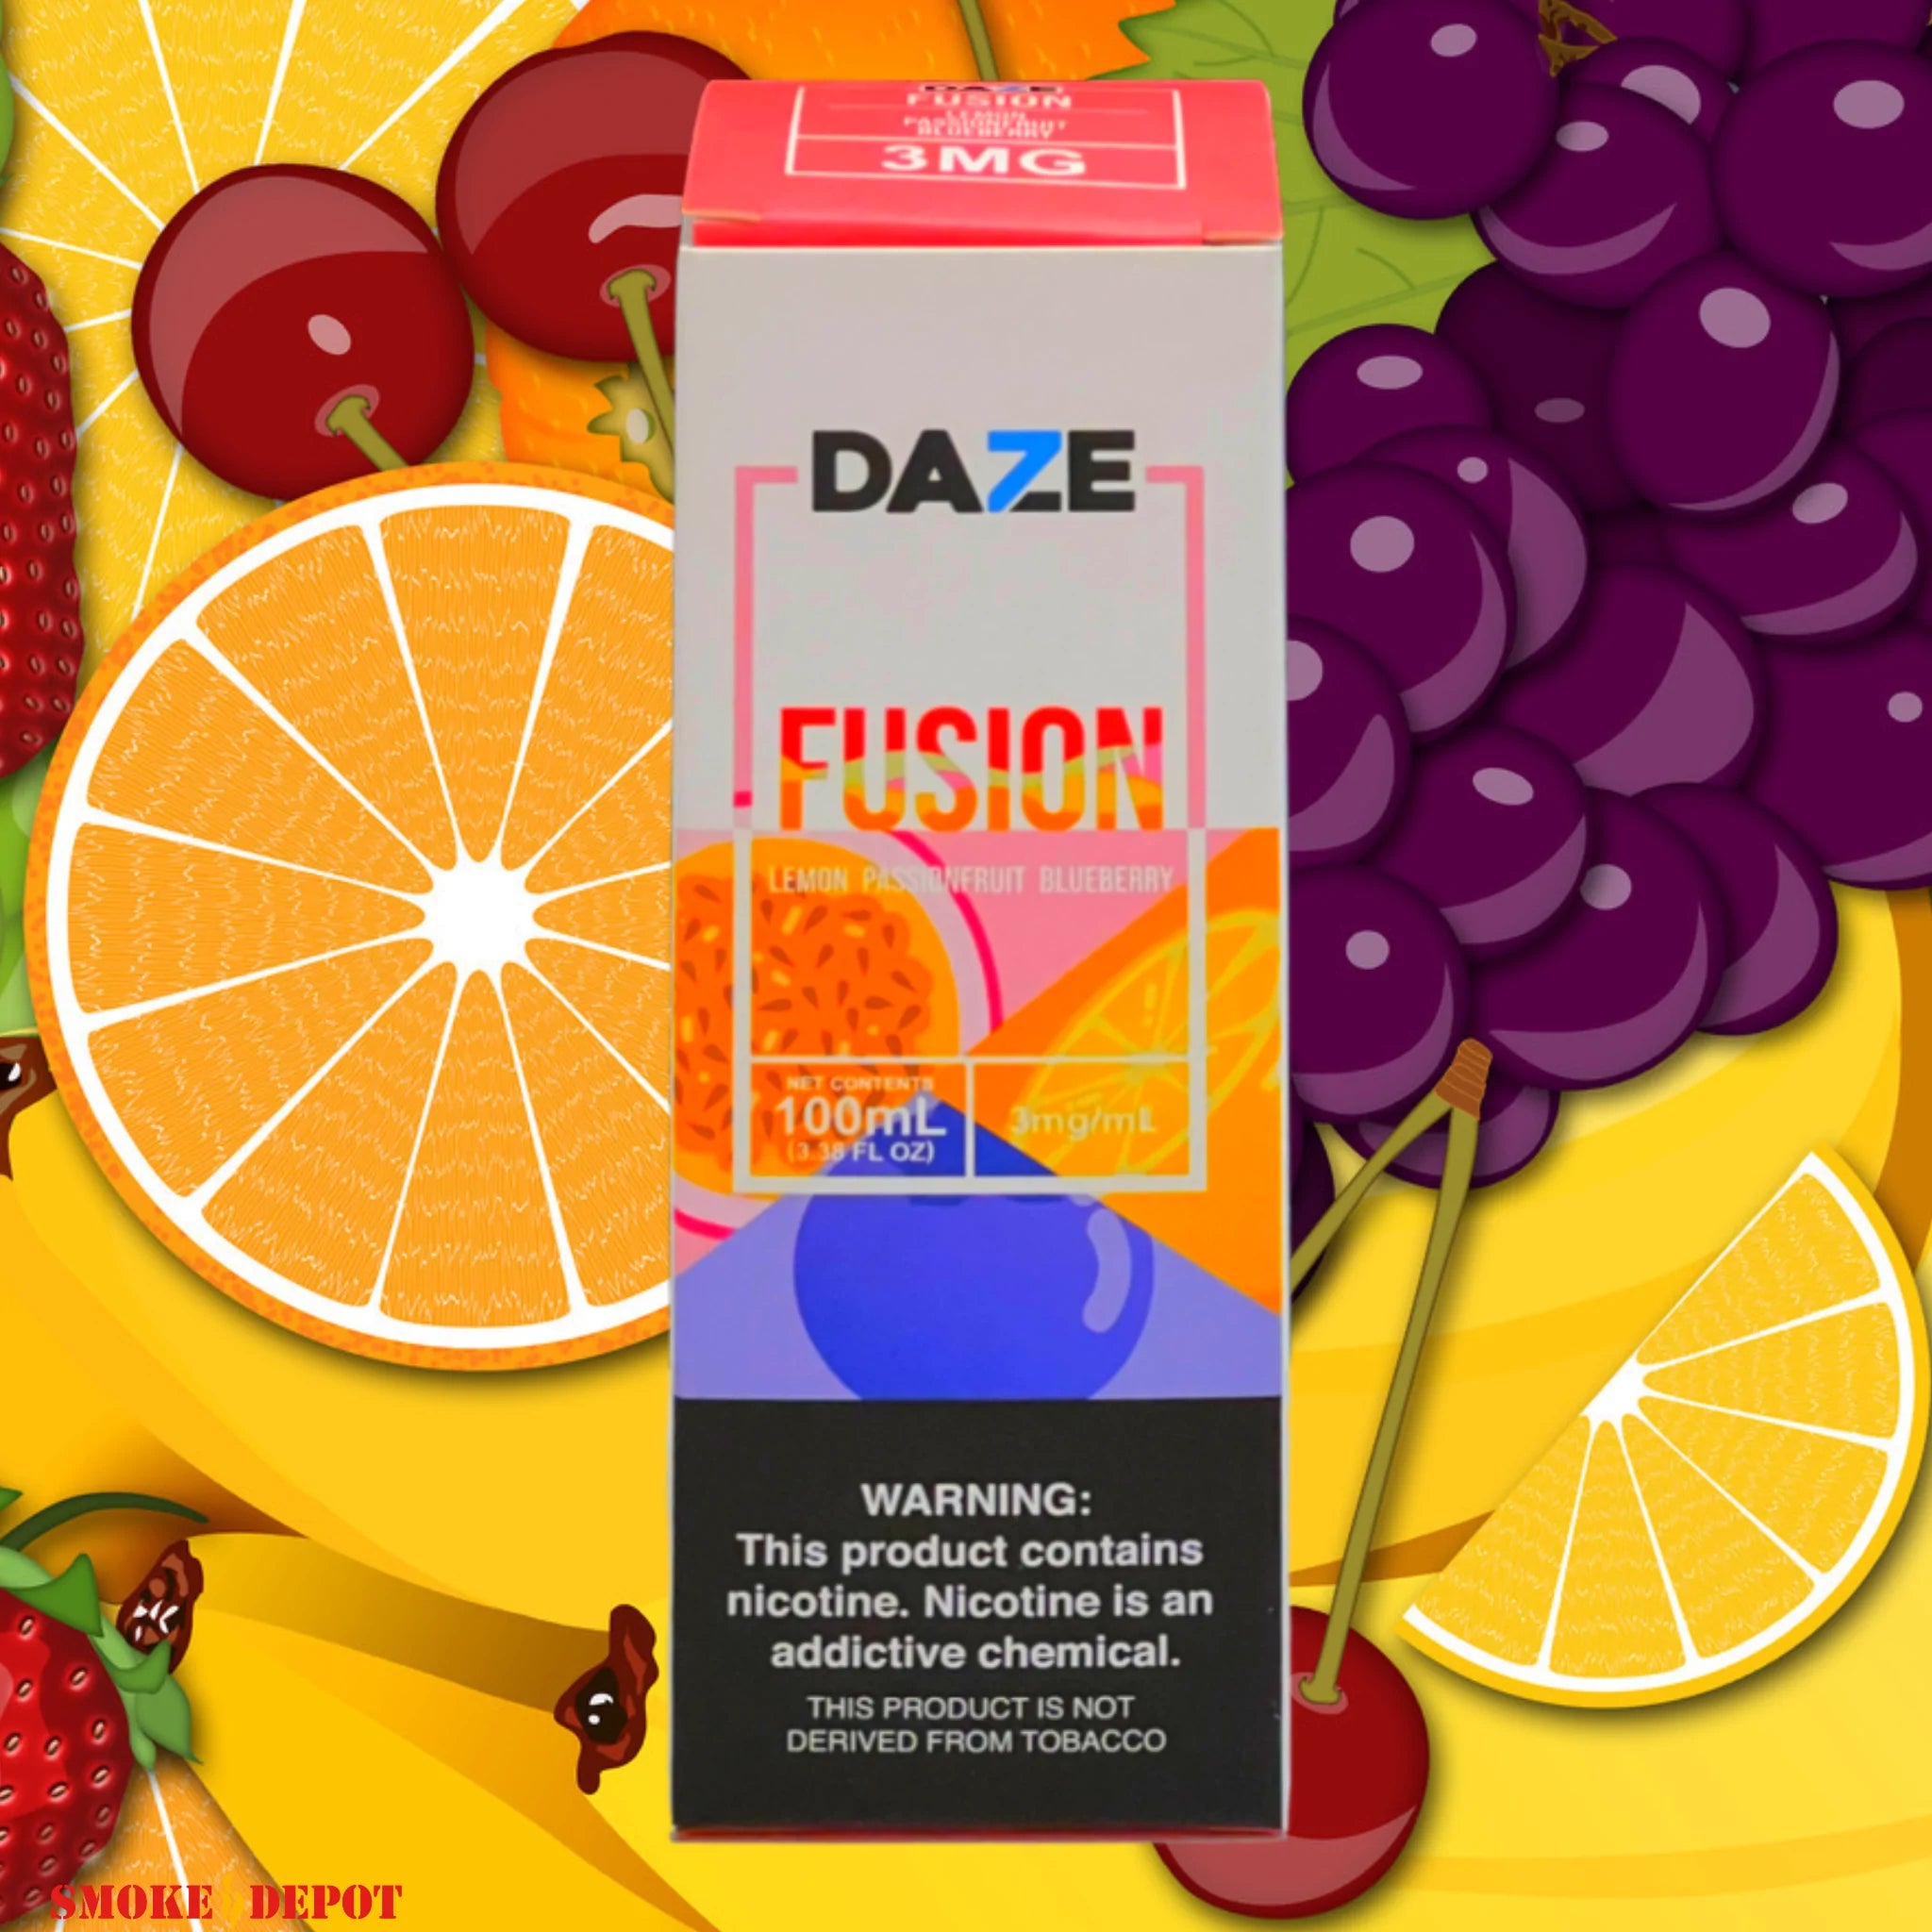 REDS FUSION E-Juice